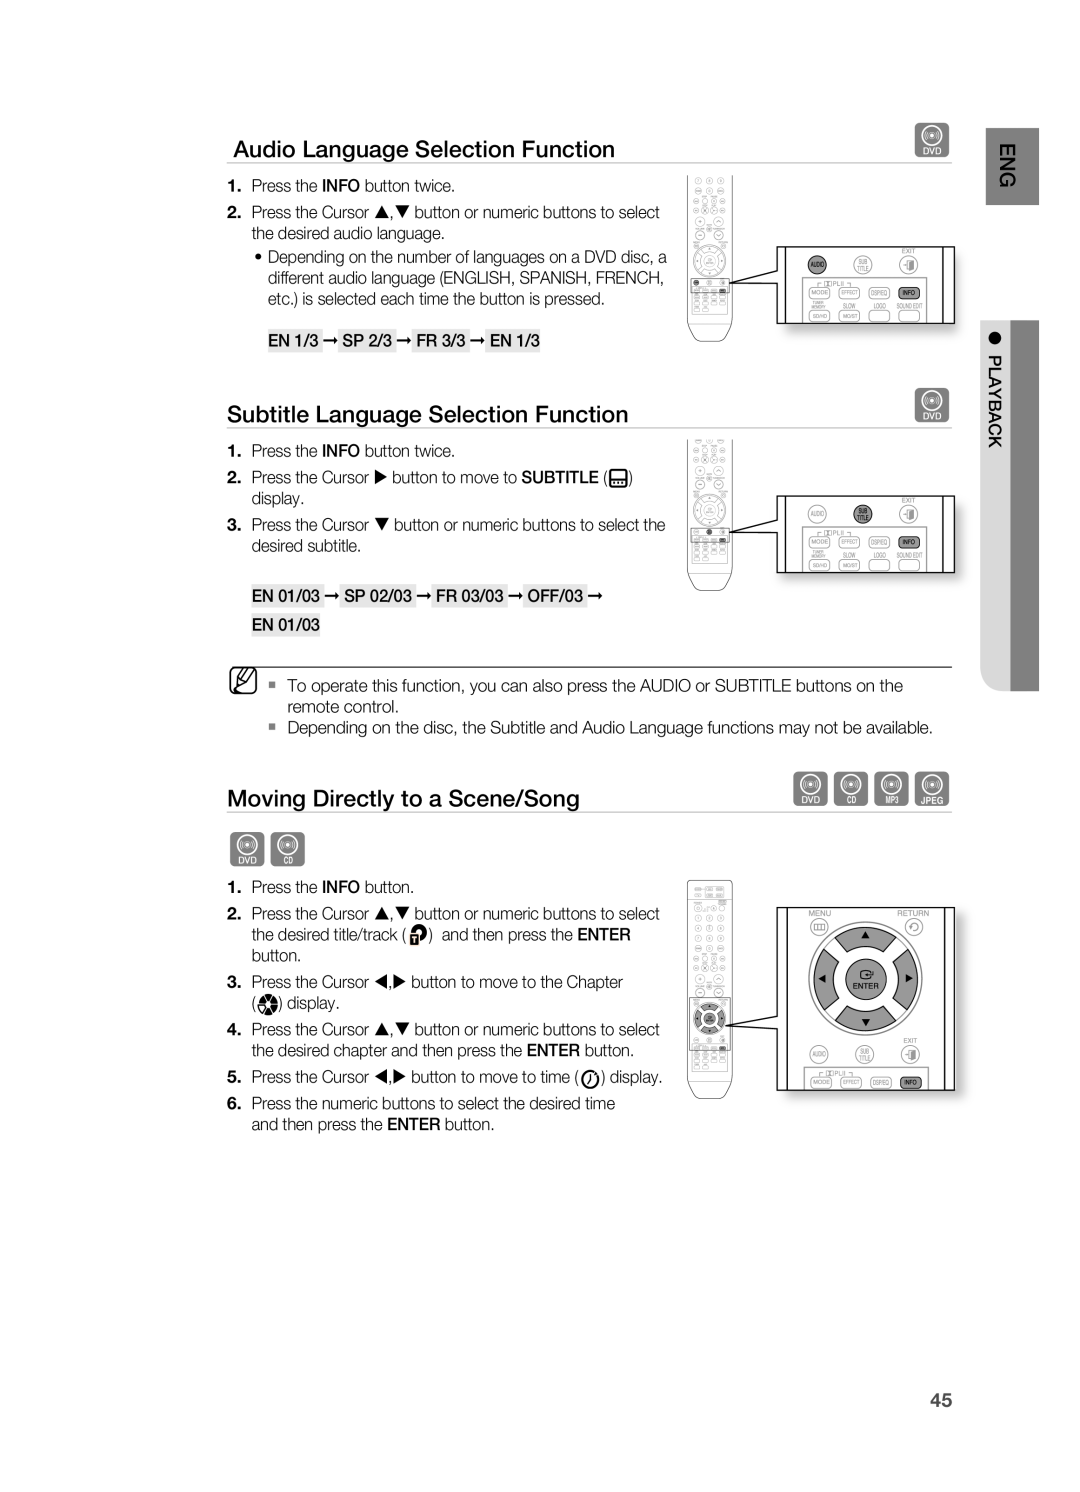 Samsung HT-TWZ415 user manual dBAG, Audio Language Selection Function, Subtitle Language Selection Function 